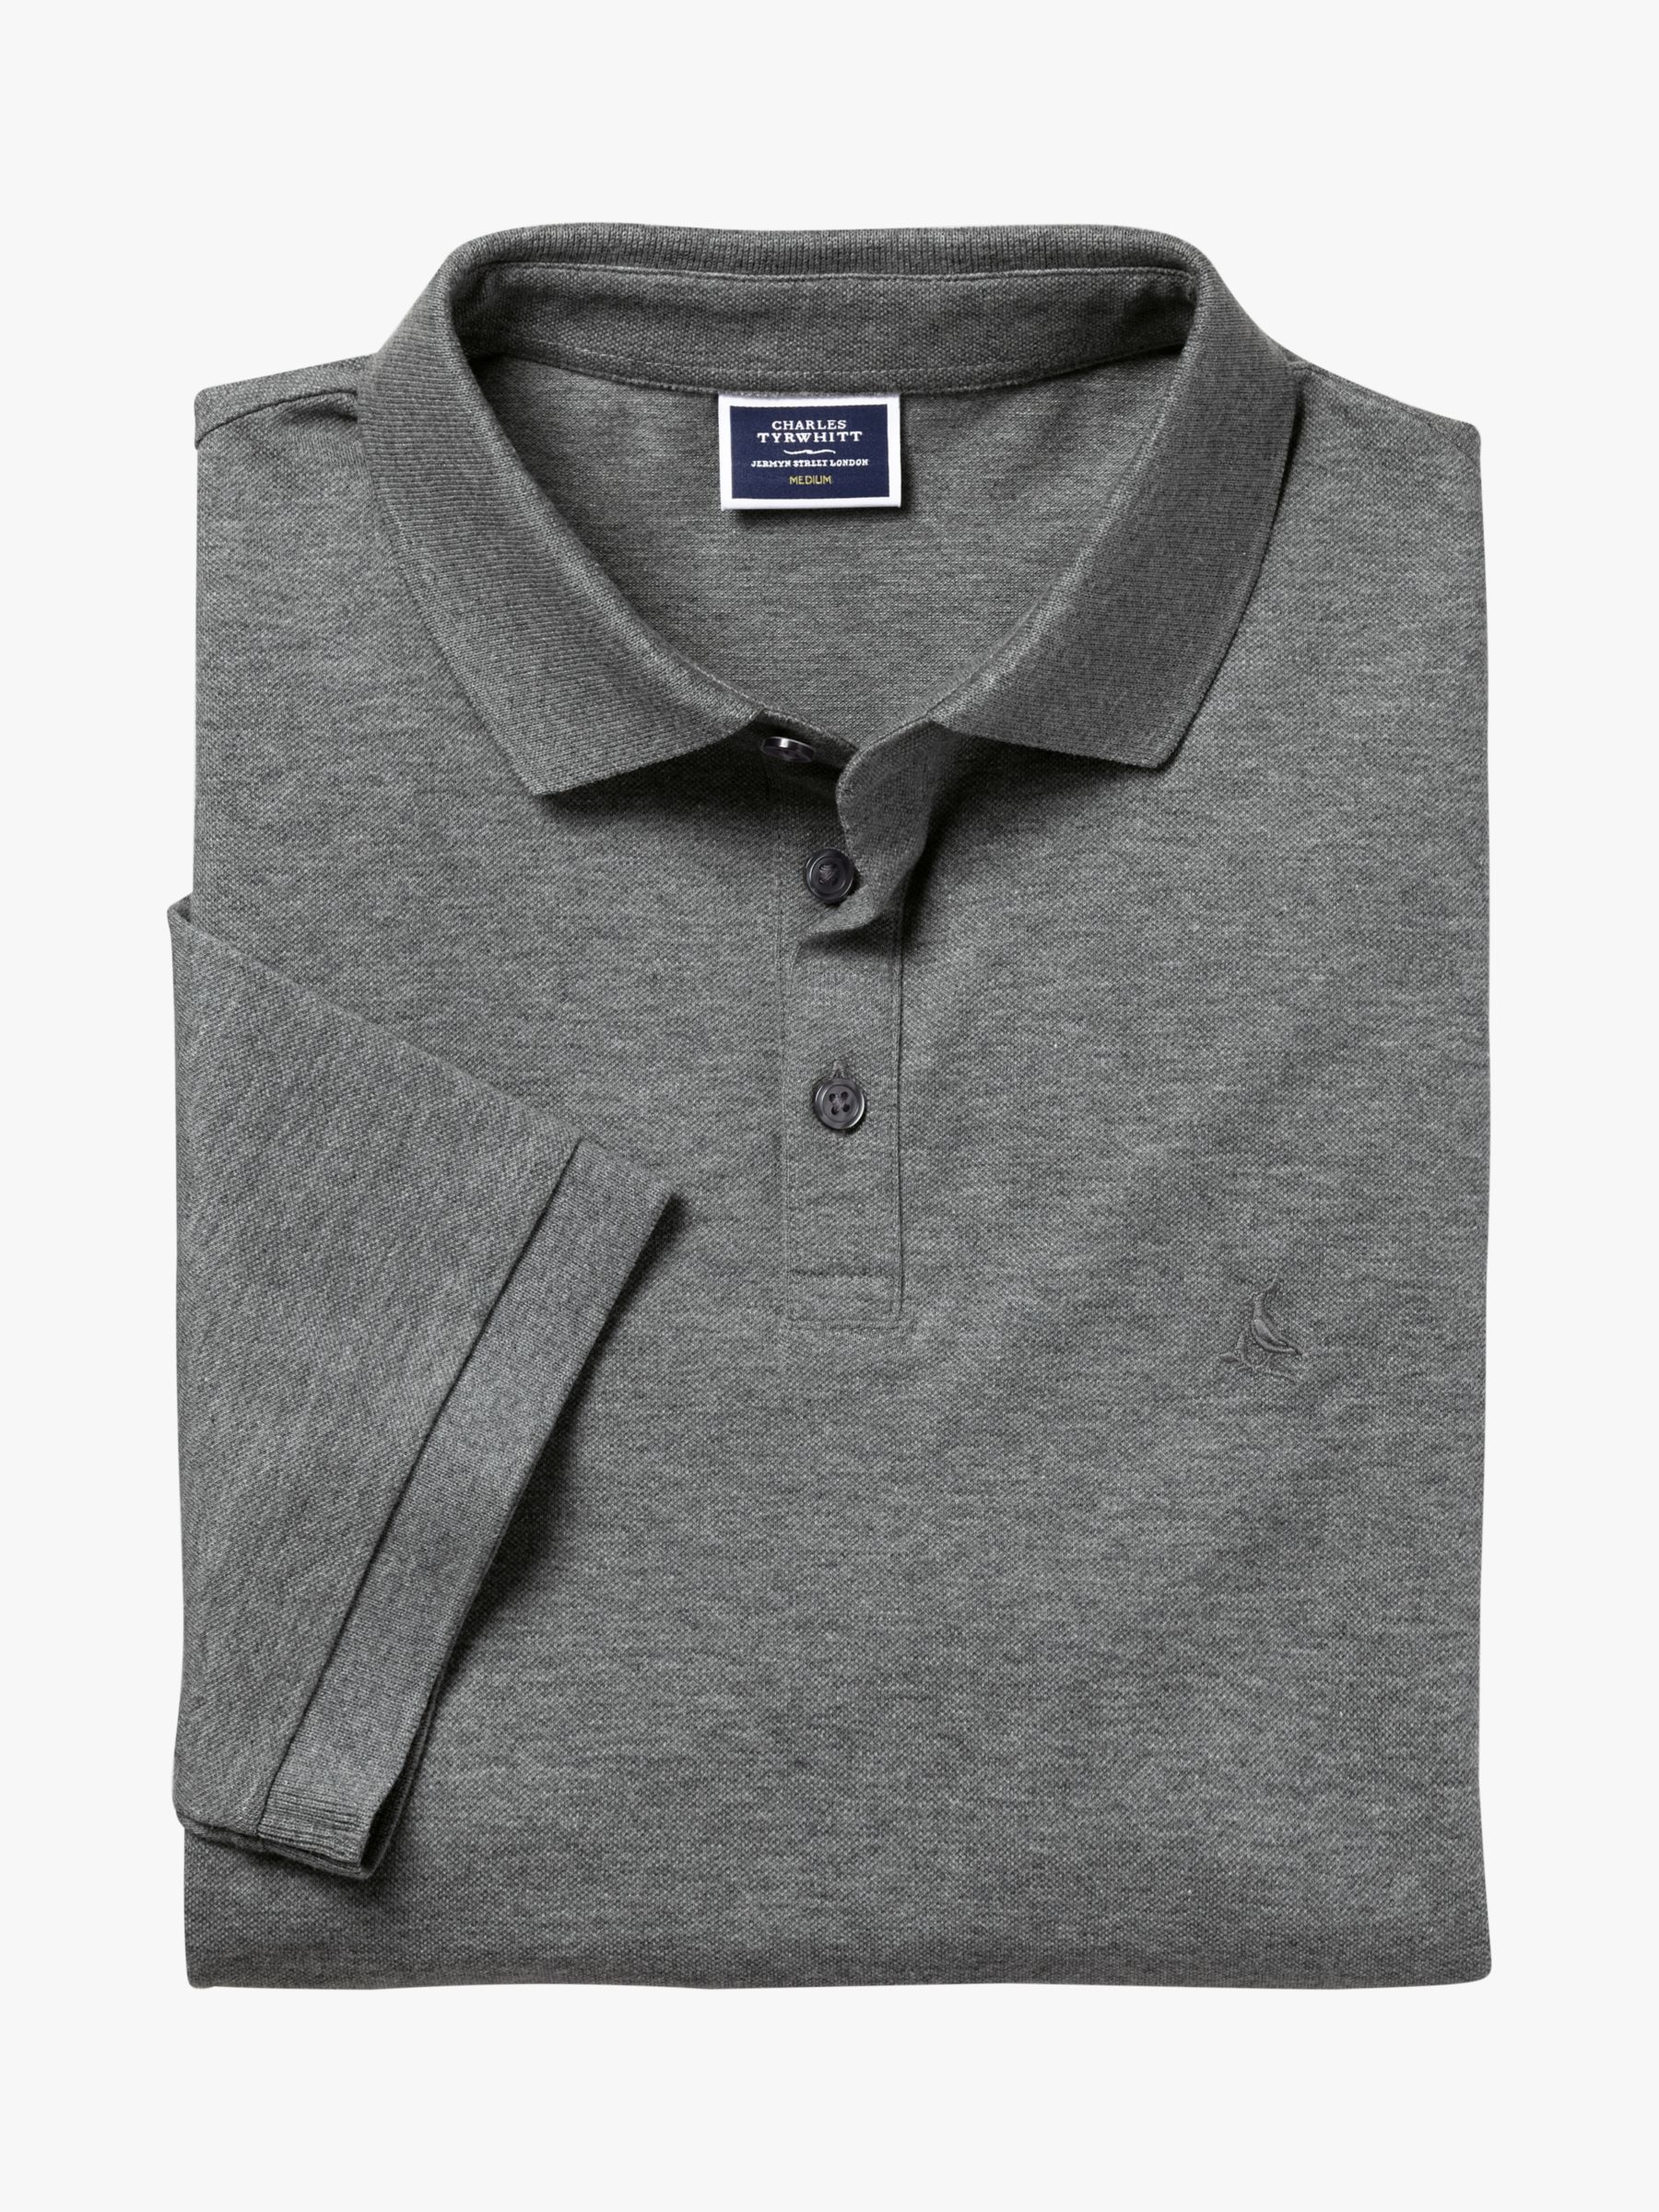 Charles Tyrwhitt Pique Polo Shirt, Grey Marl at John Lewis & Partners